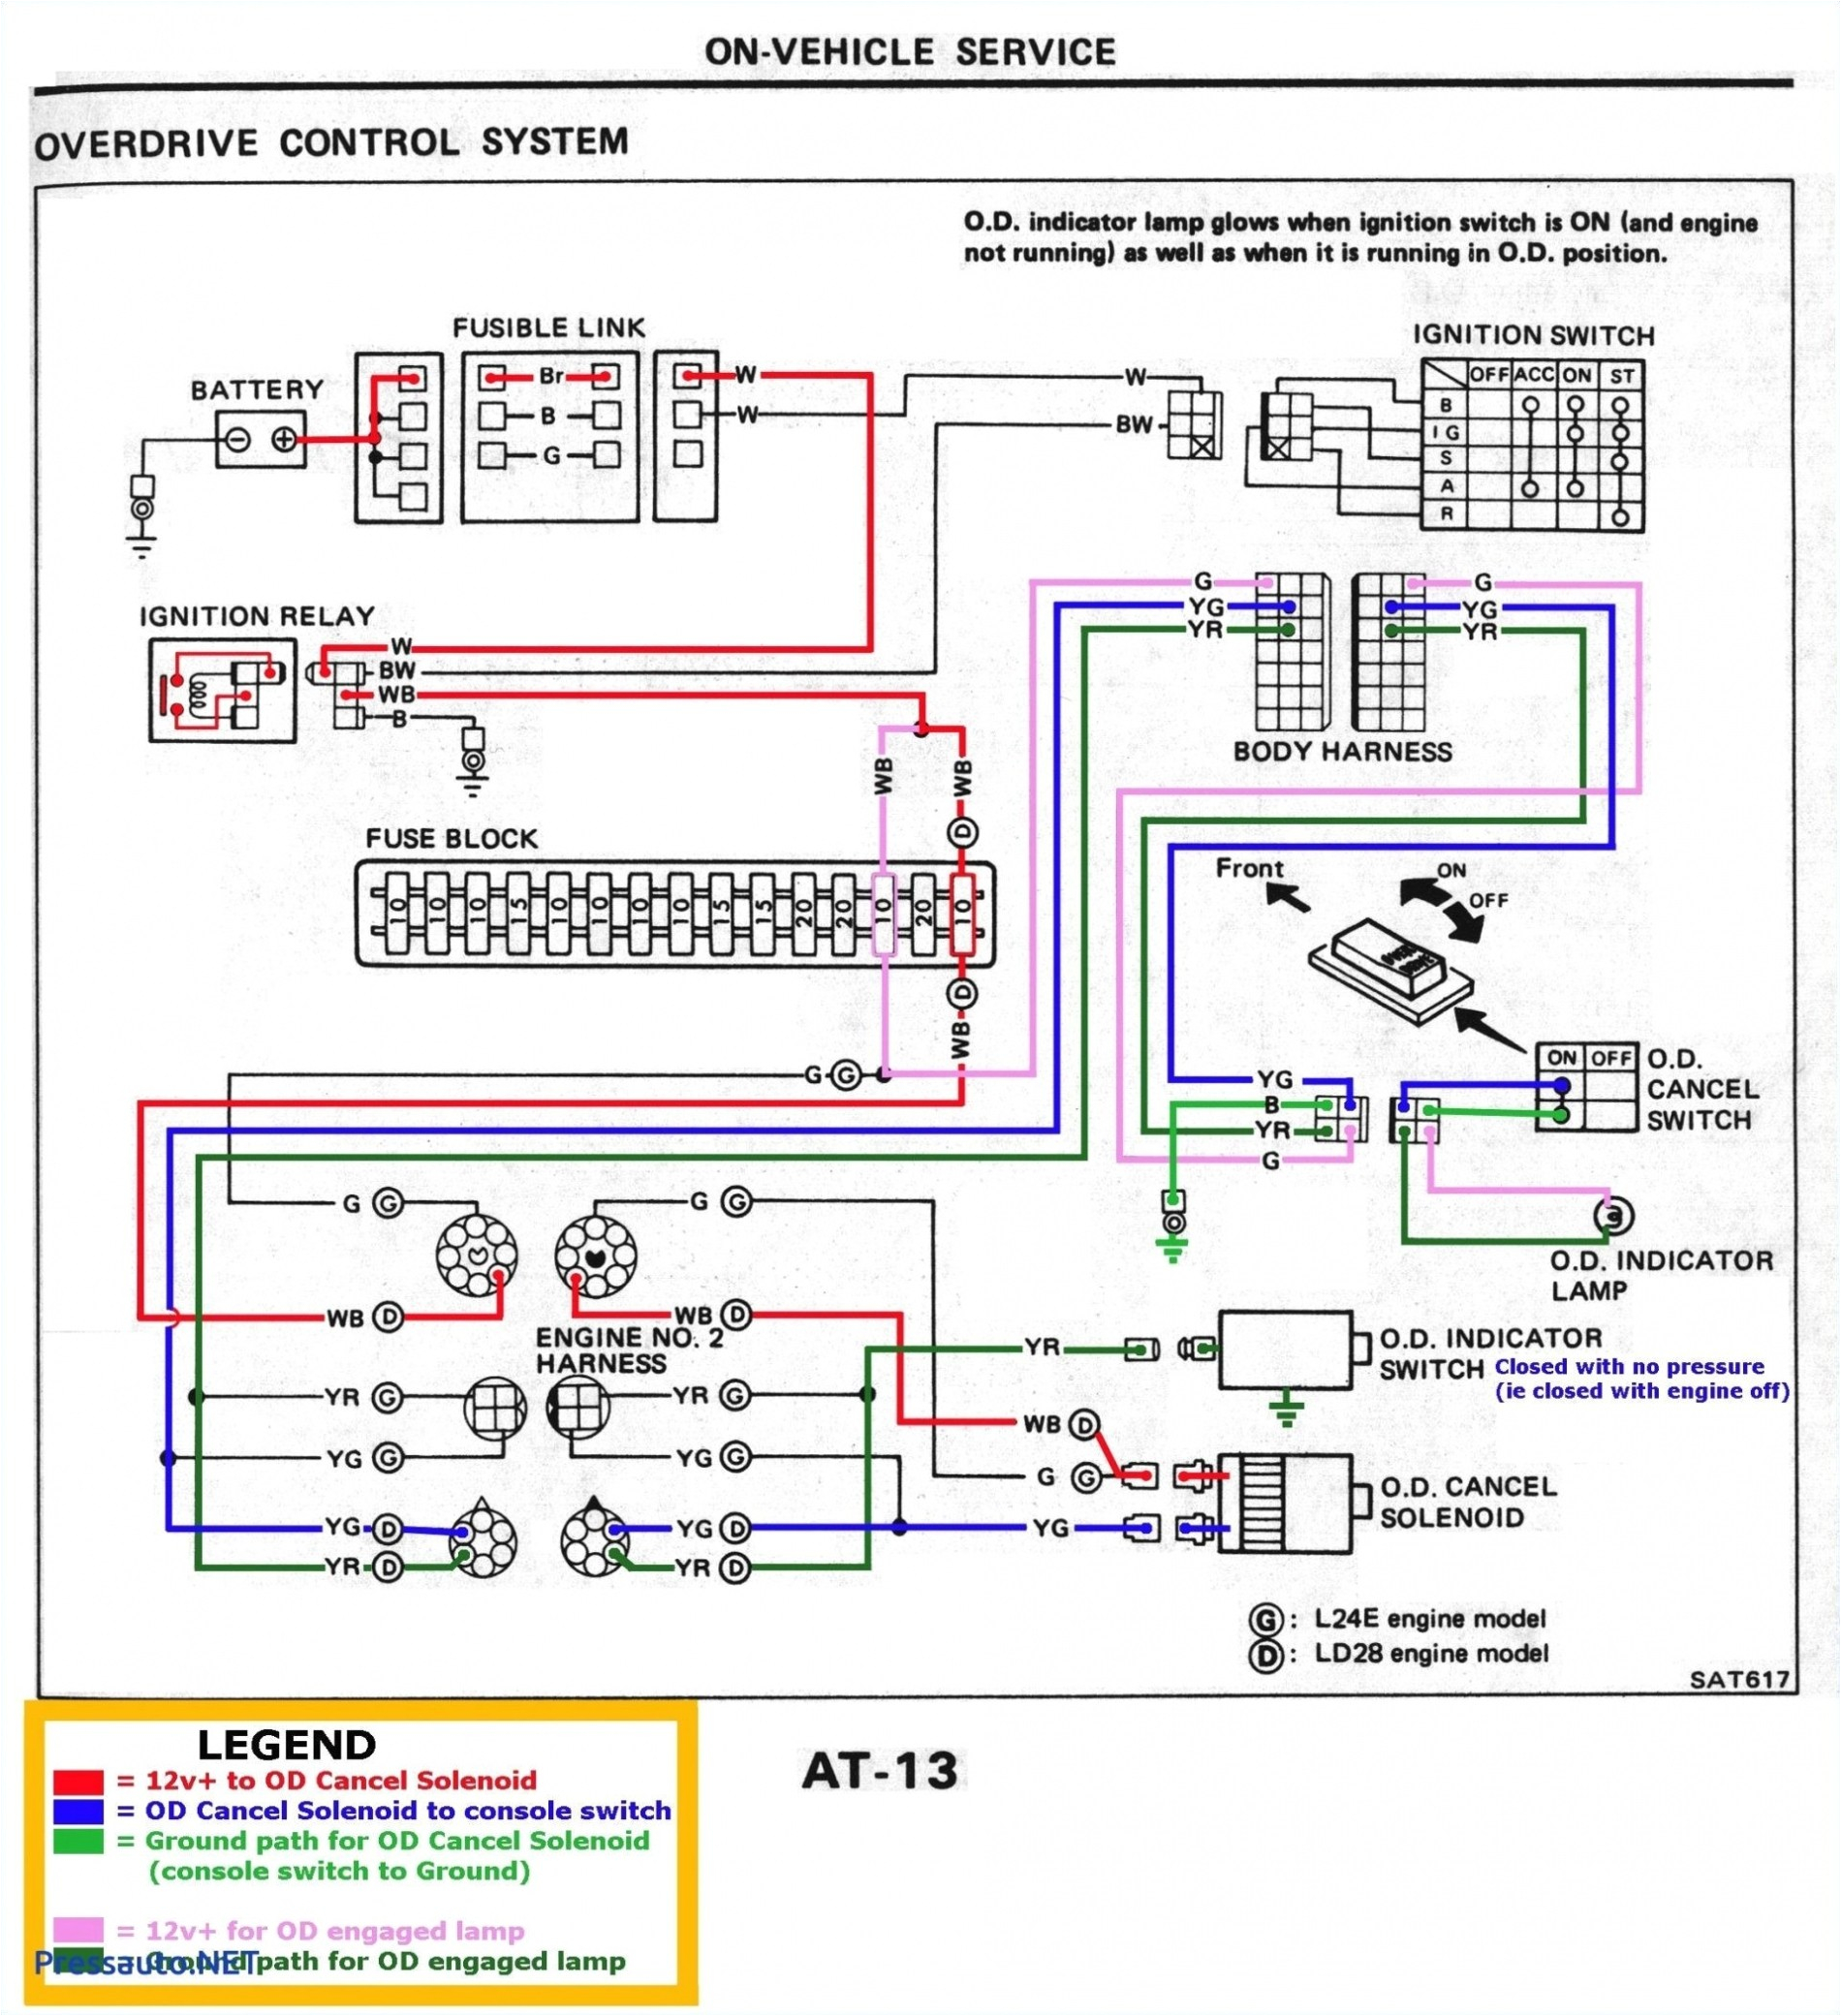 motorola alternator wiring diagram john deere wiring diagram expert 24 volt motorola alternator wiring diagram motorola alternator wiring diagram